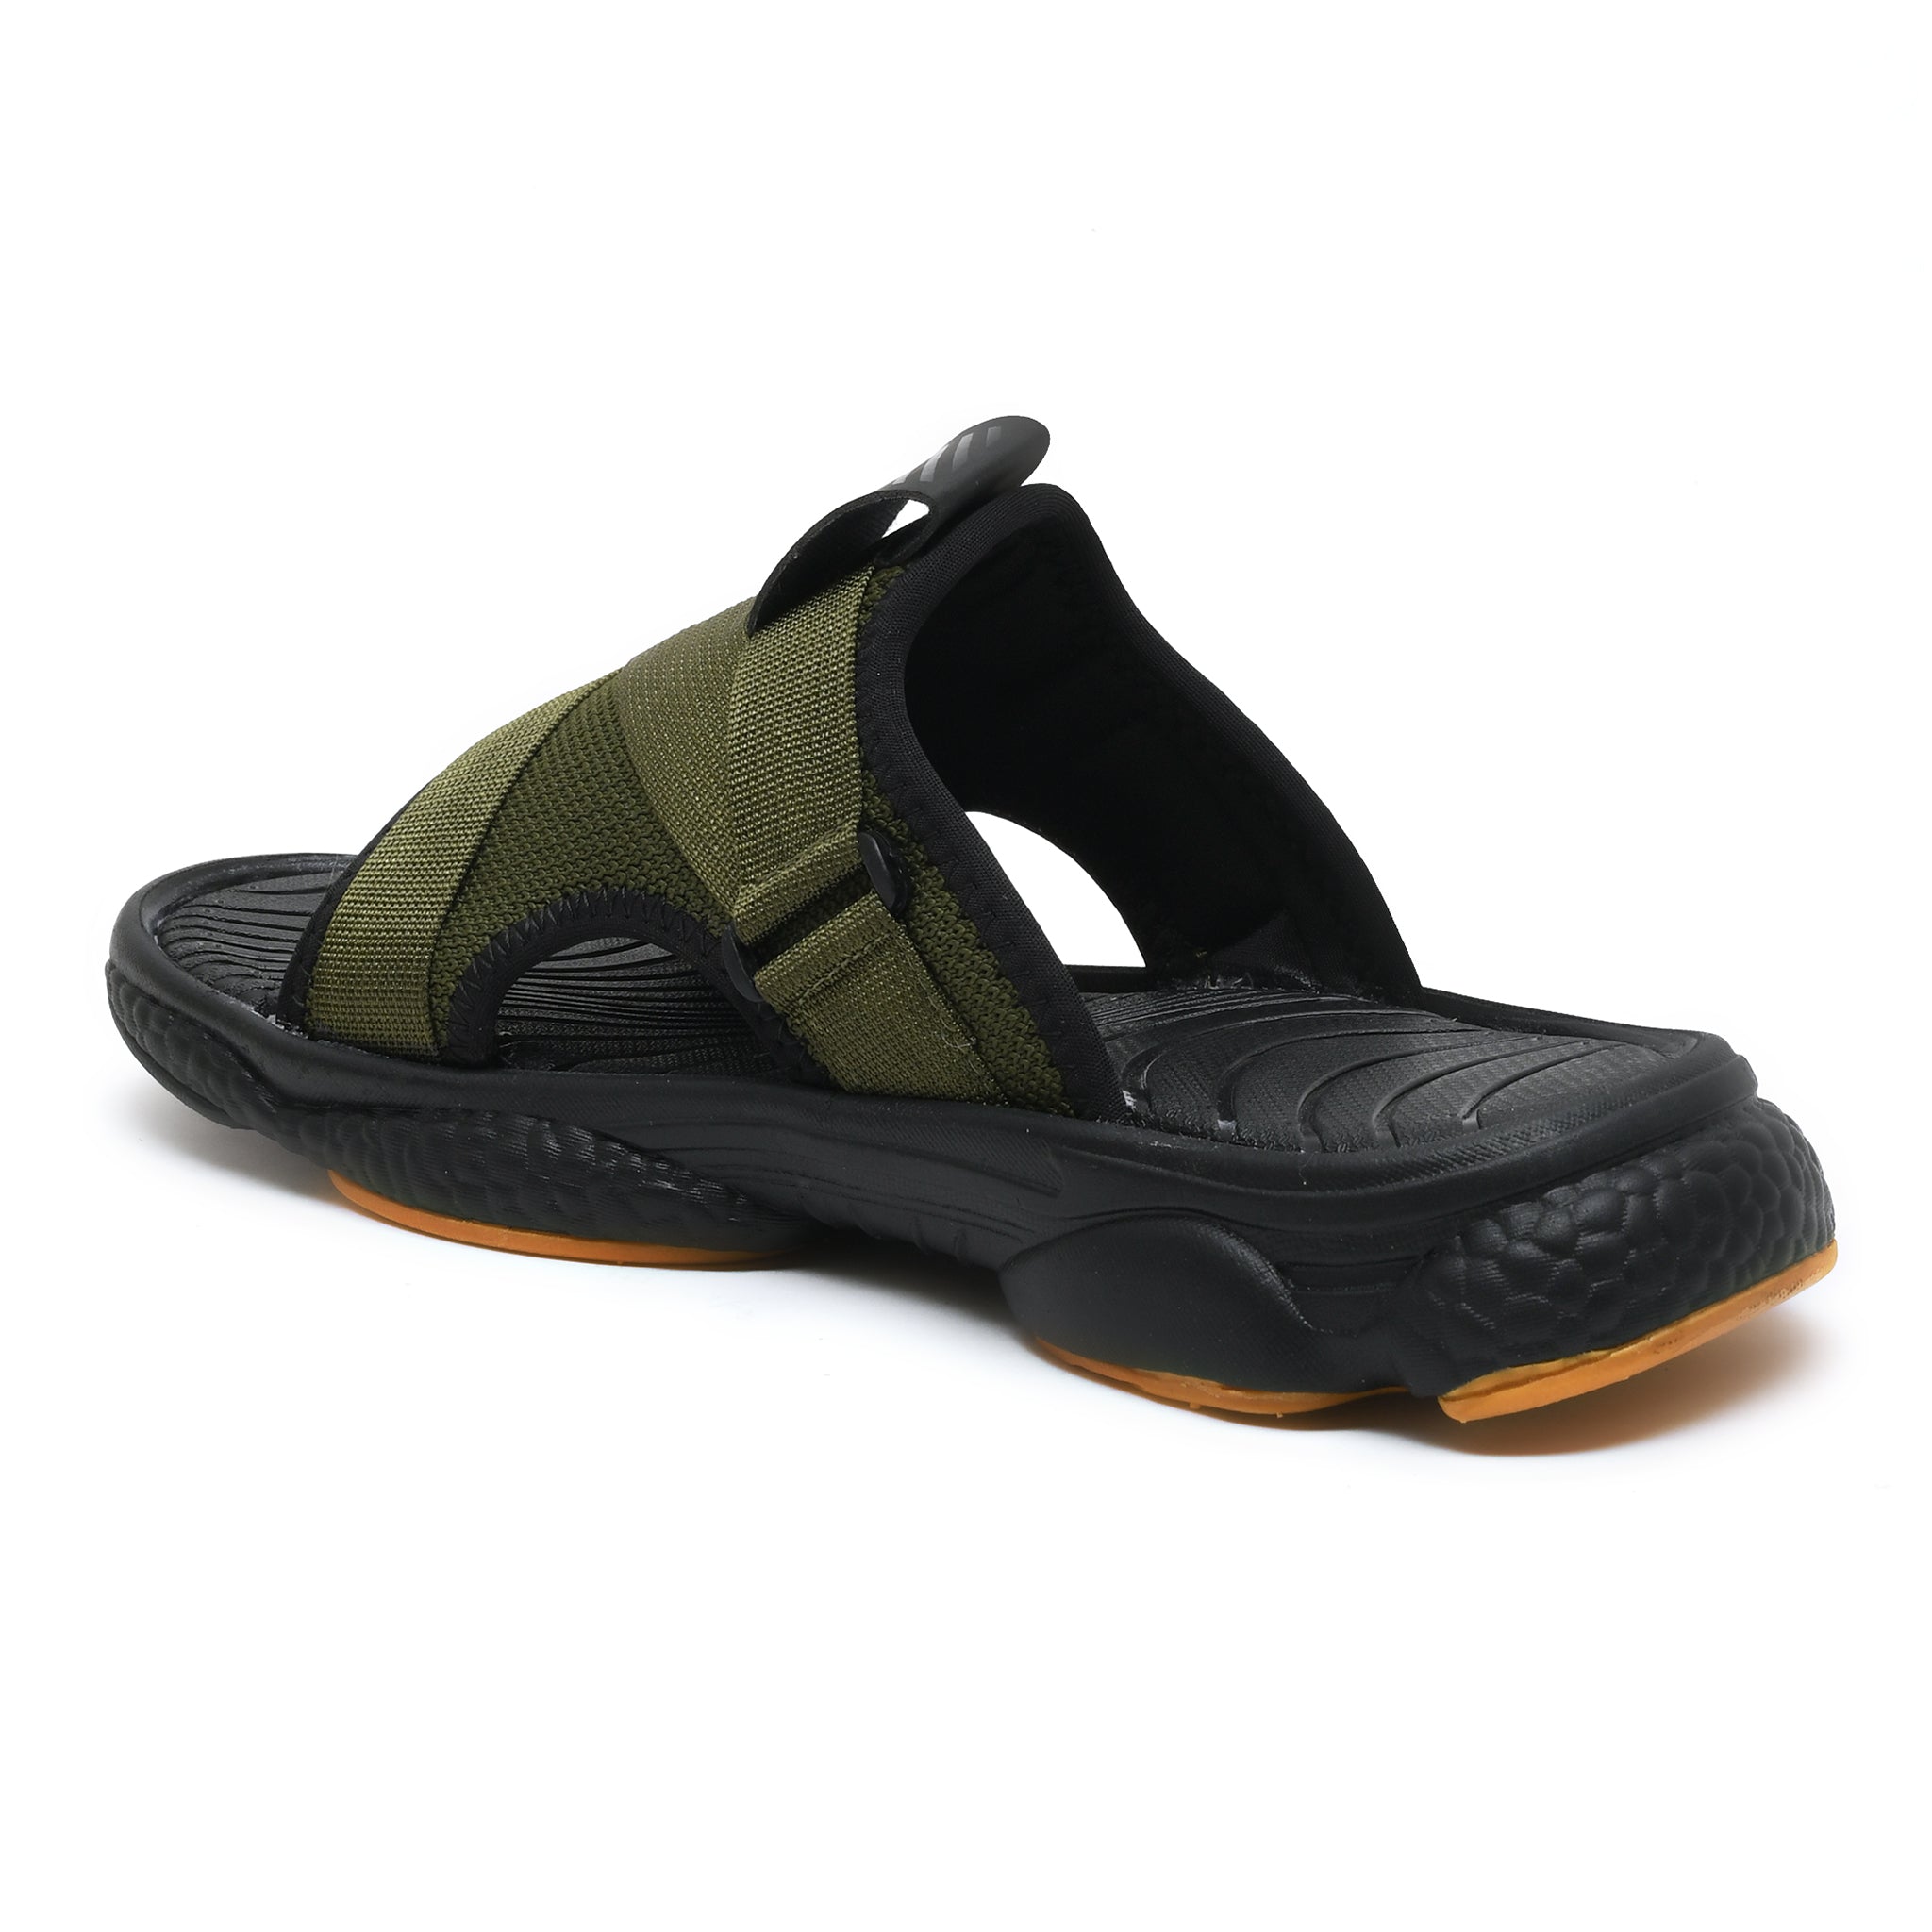 Impakto OutdoorFlex Men's Sandal